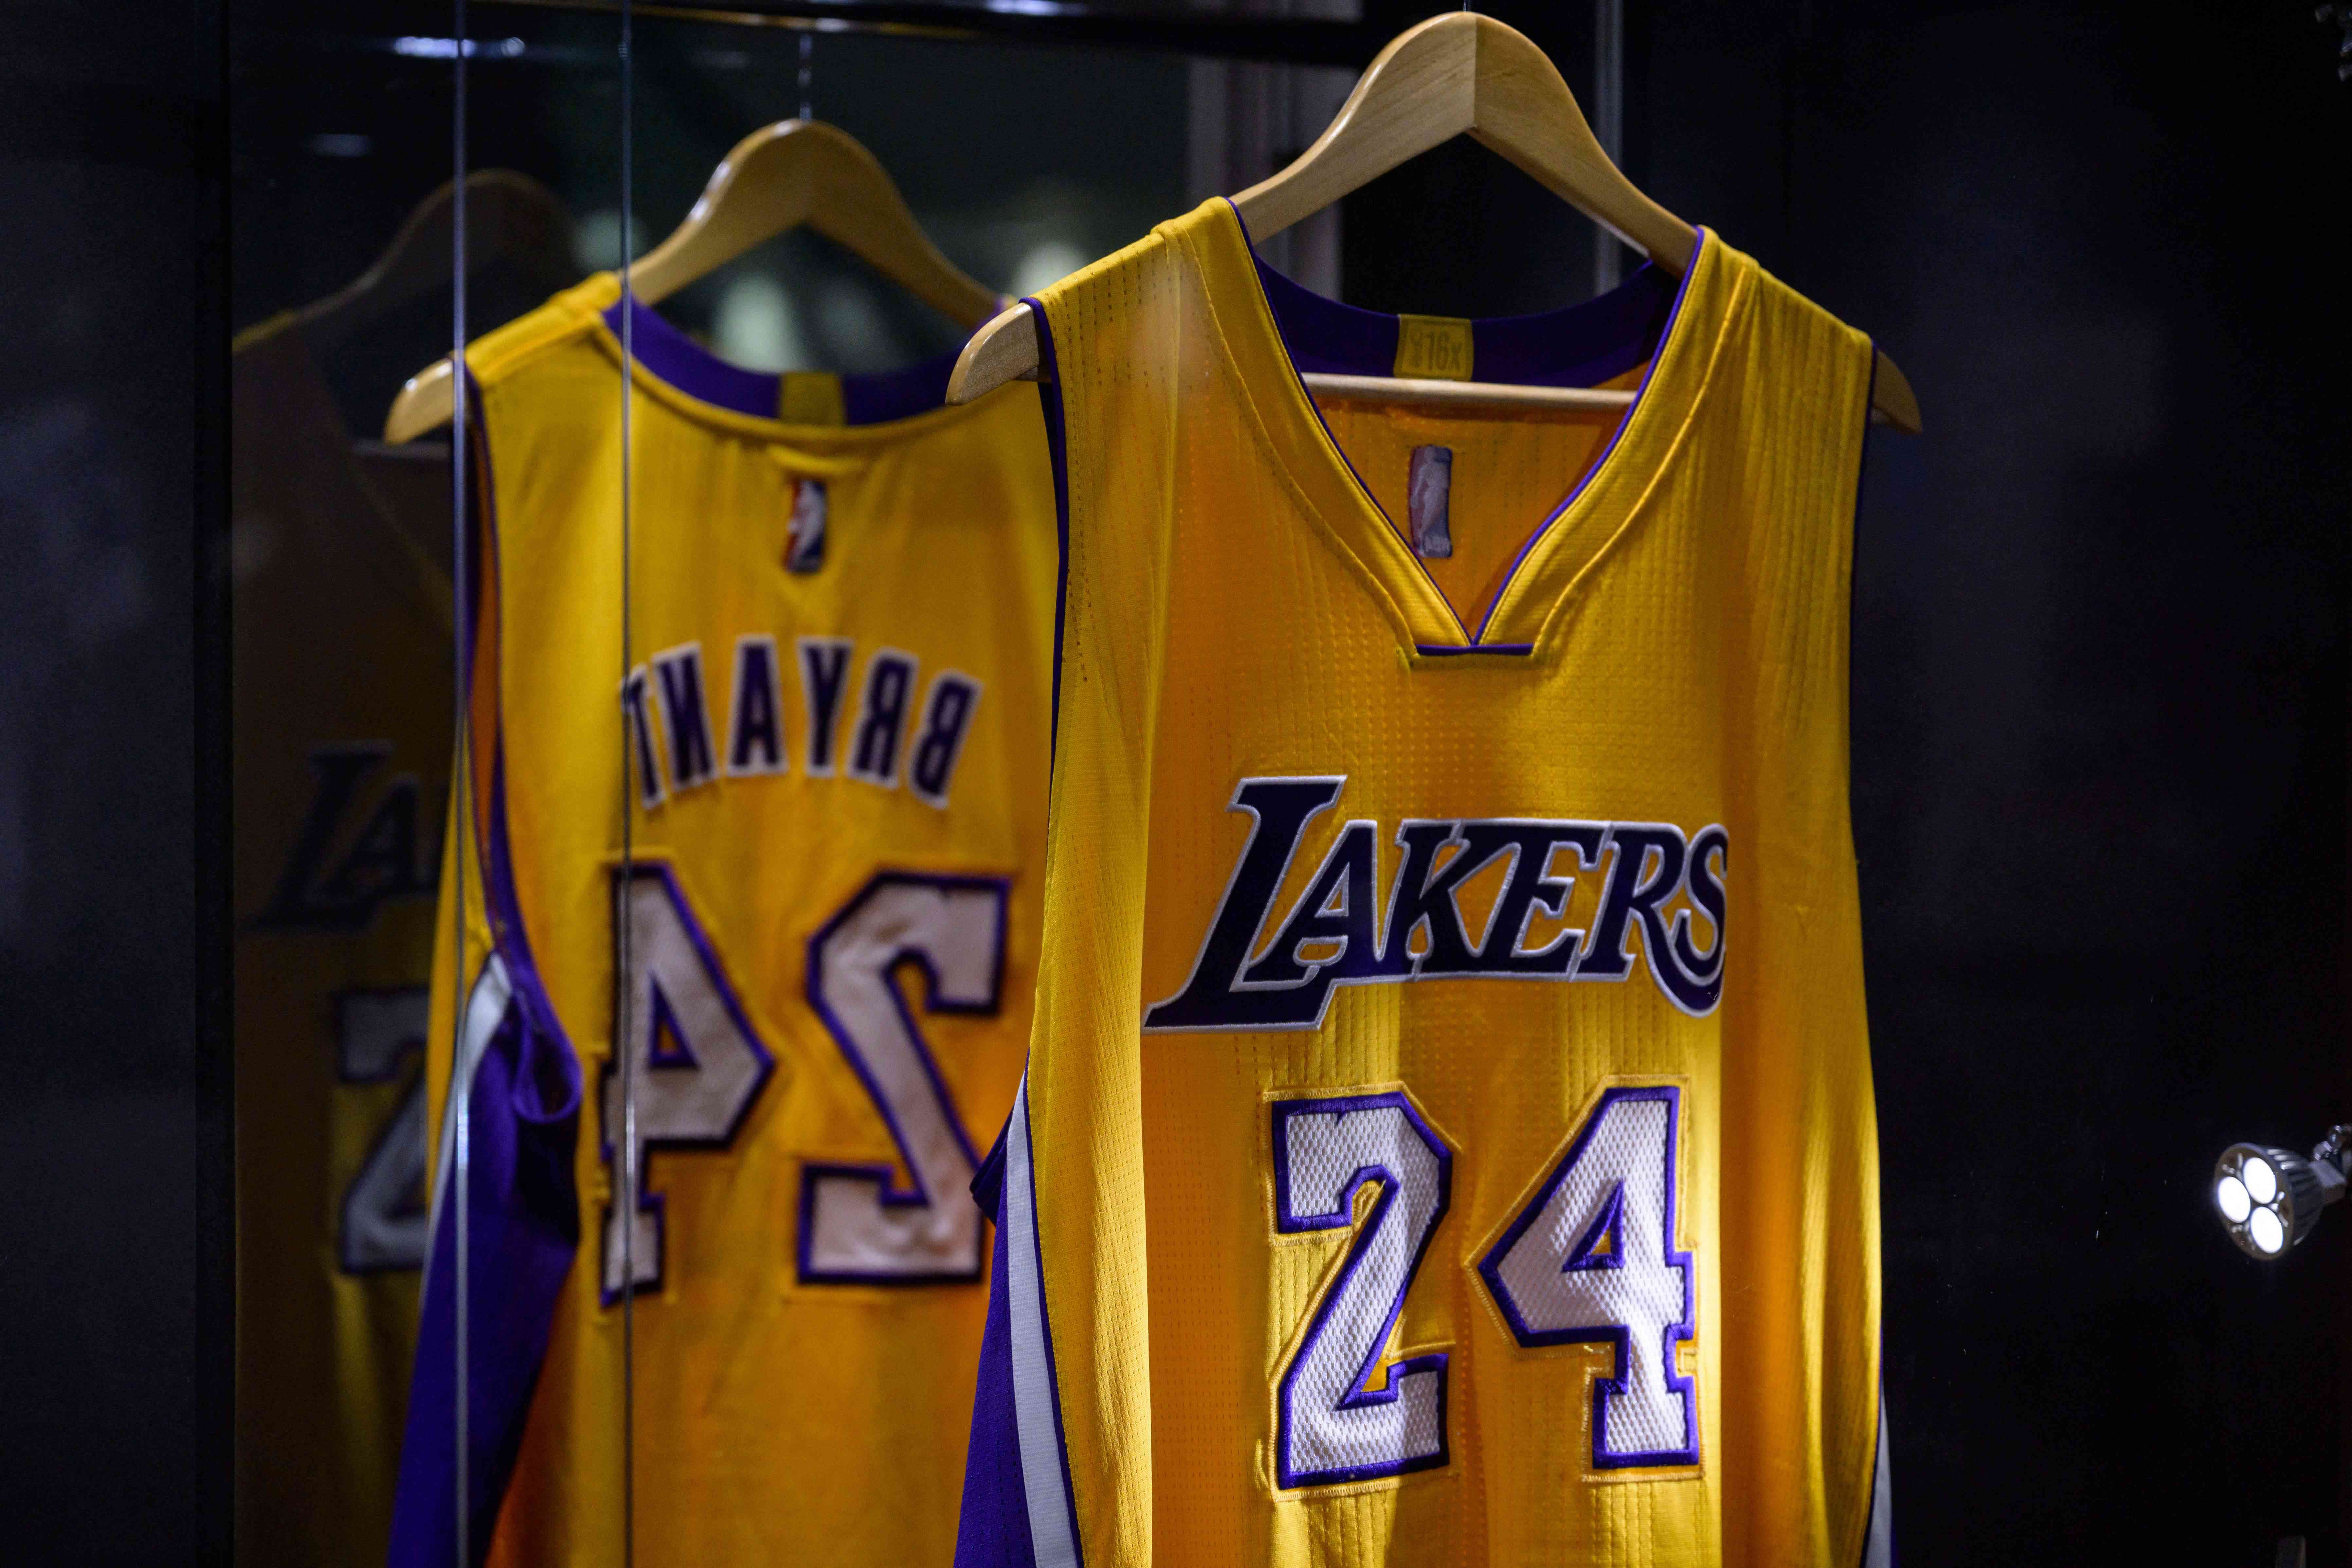 Jersey worn by US basketball player Kobe Bryant